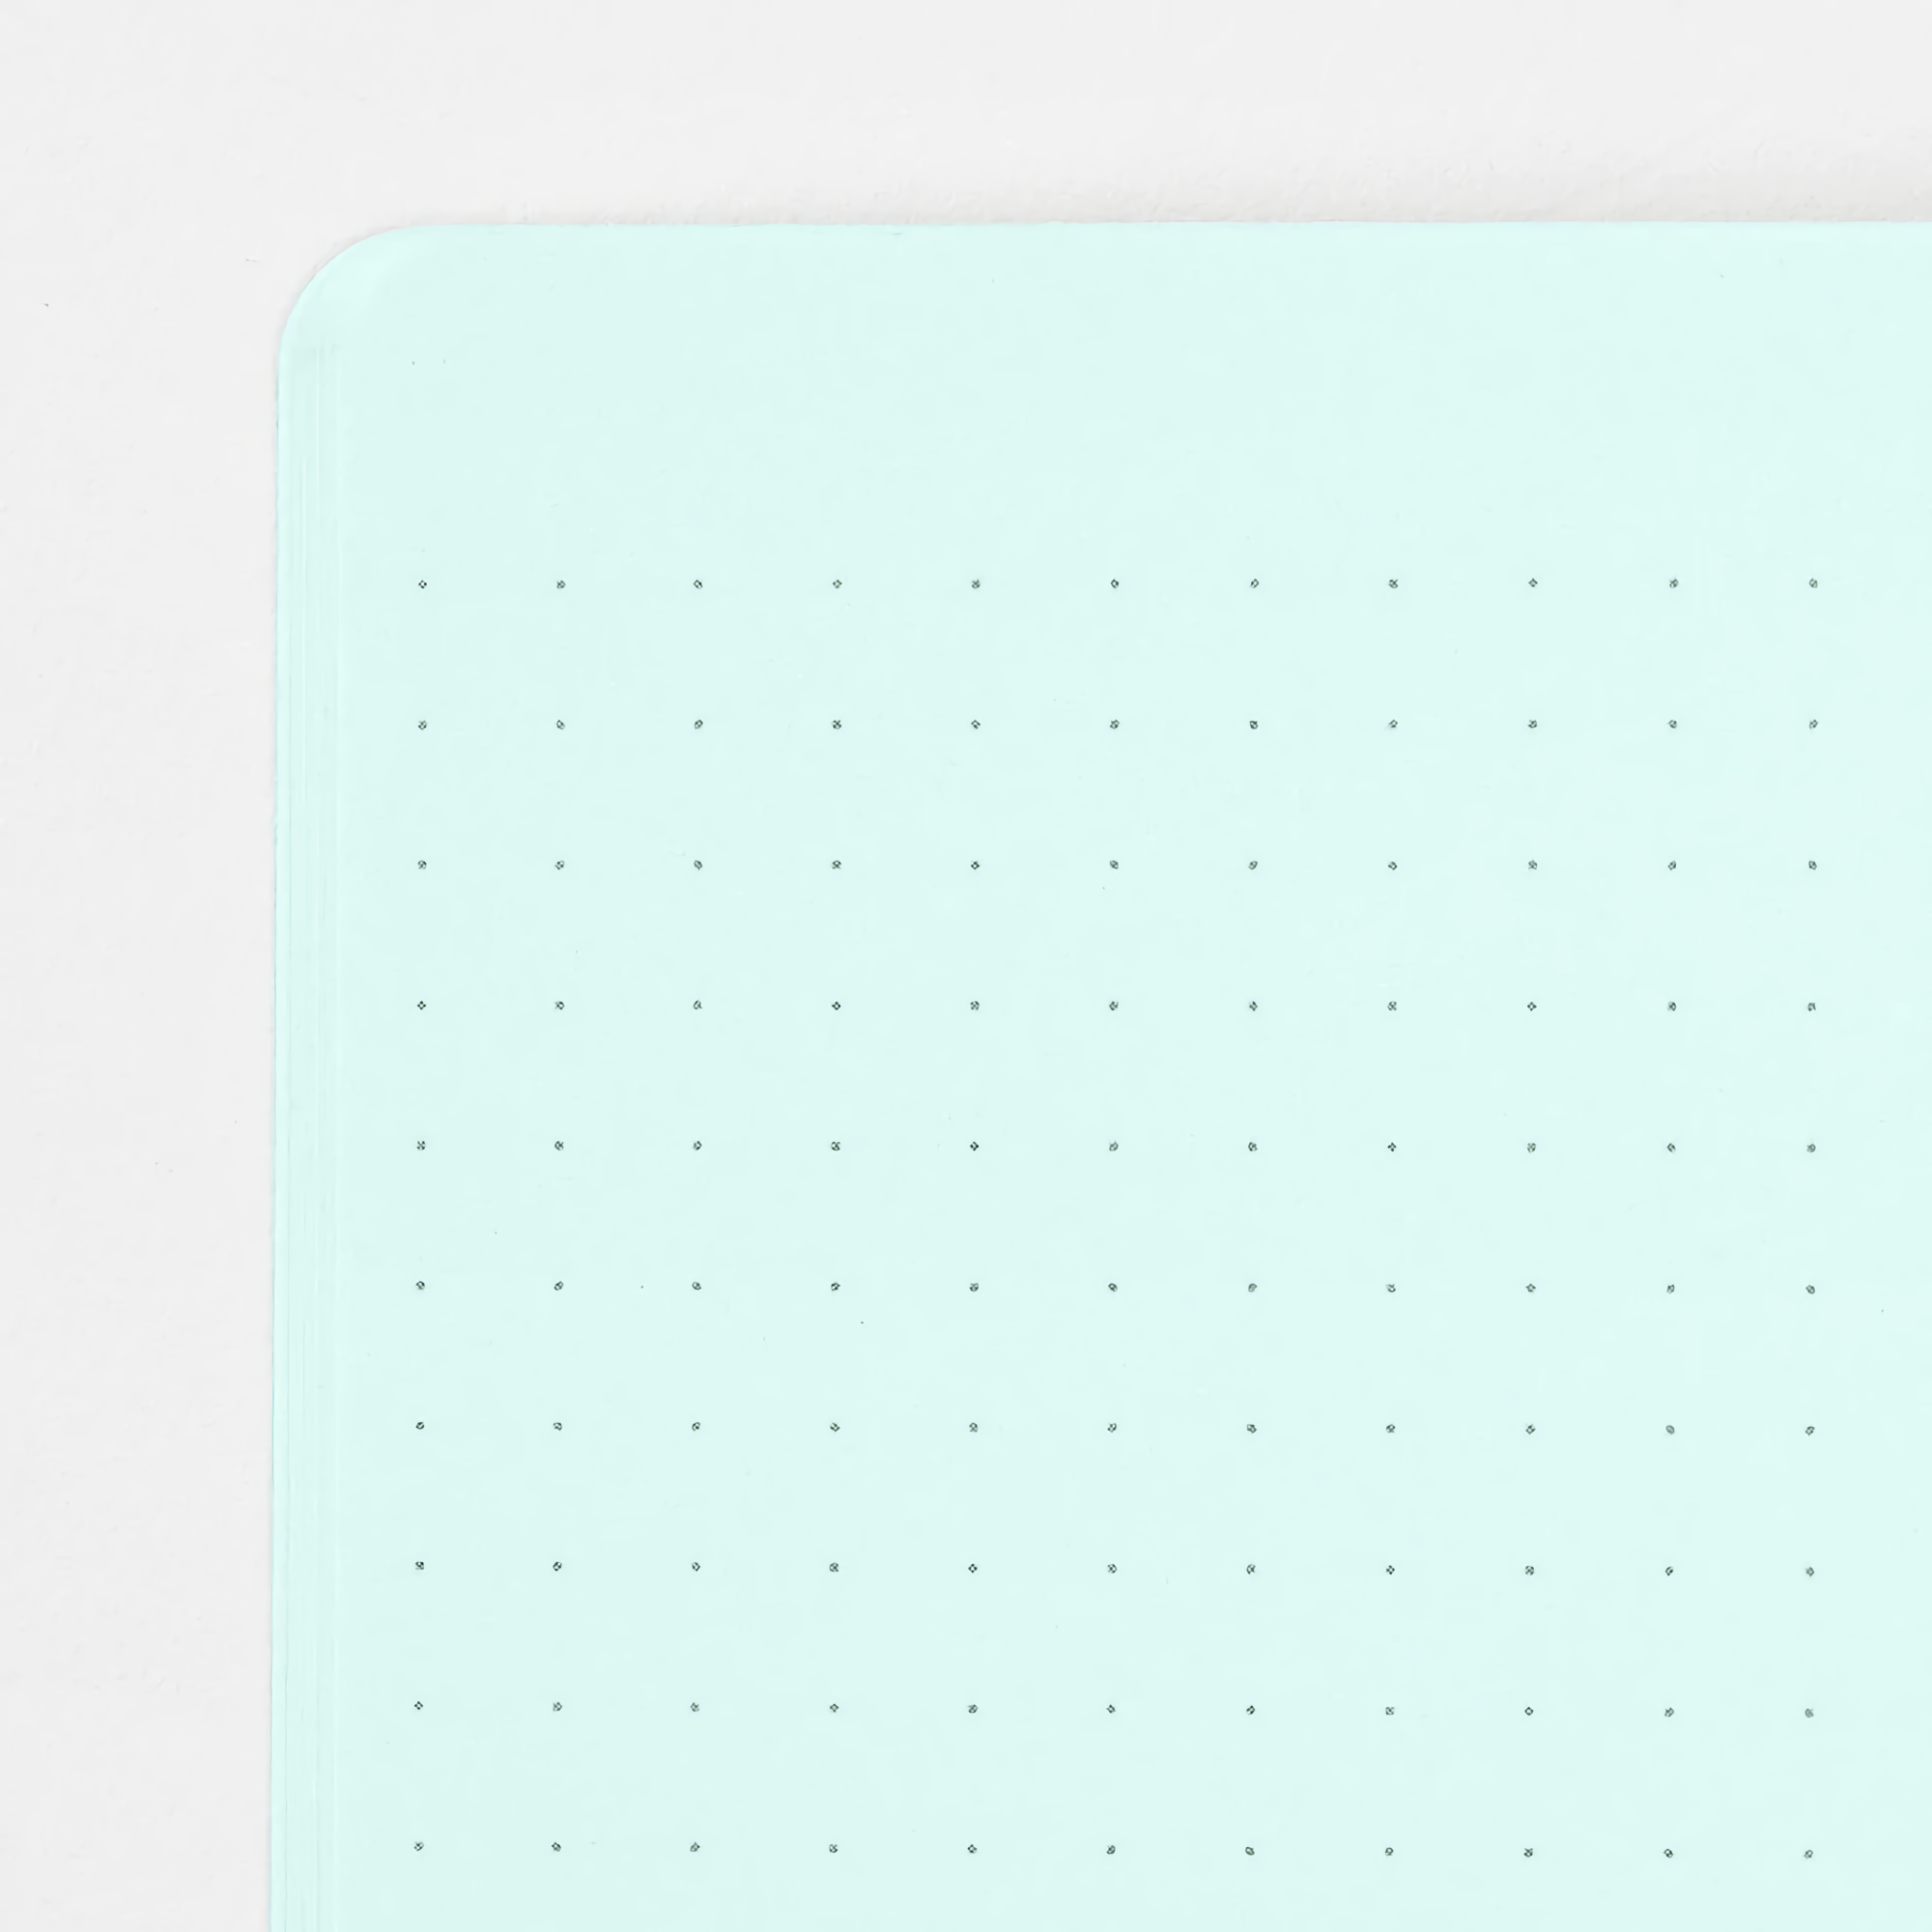 Midori Color Dot Grid Notebook A5 Blue